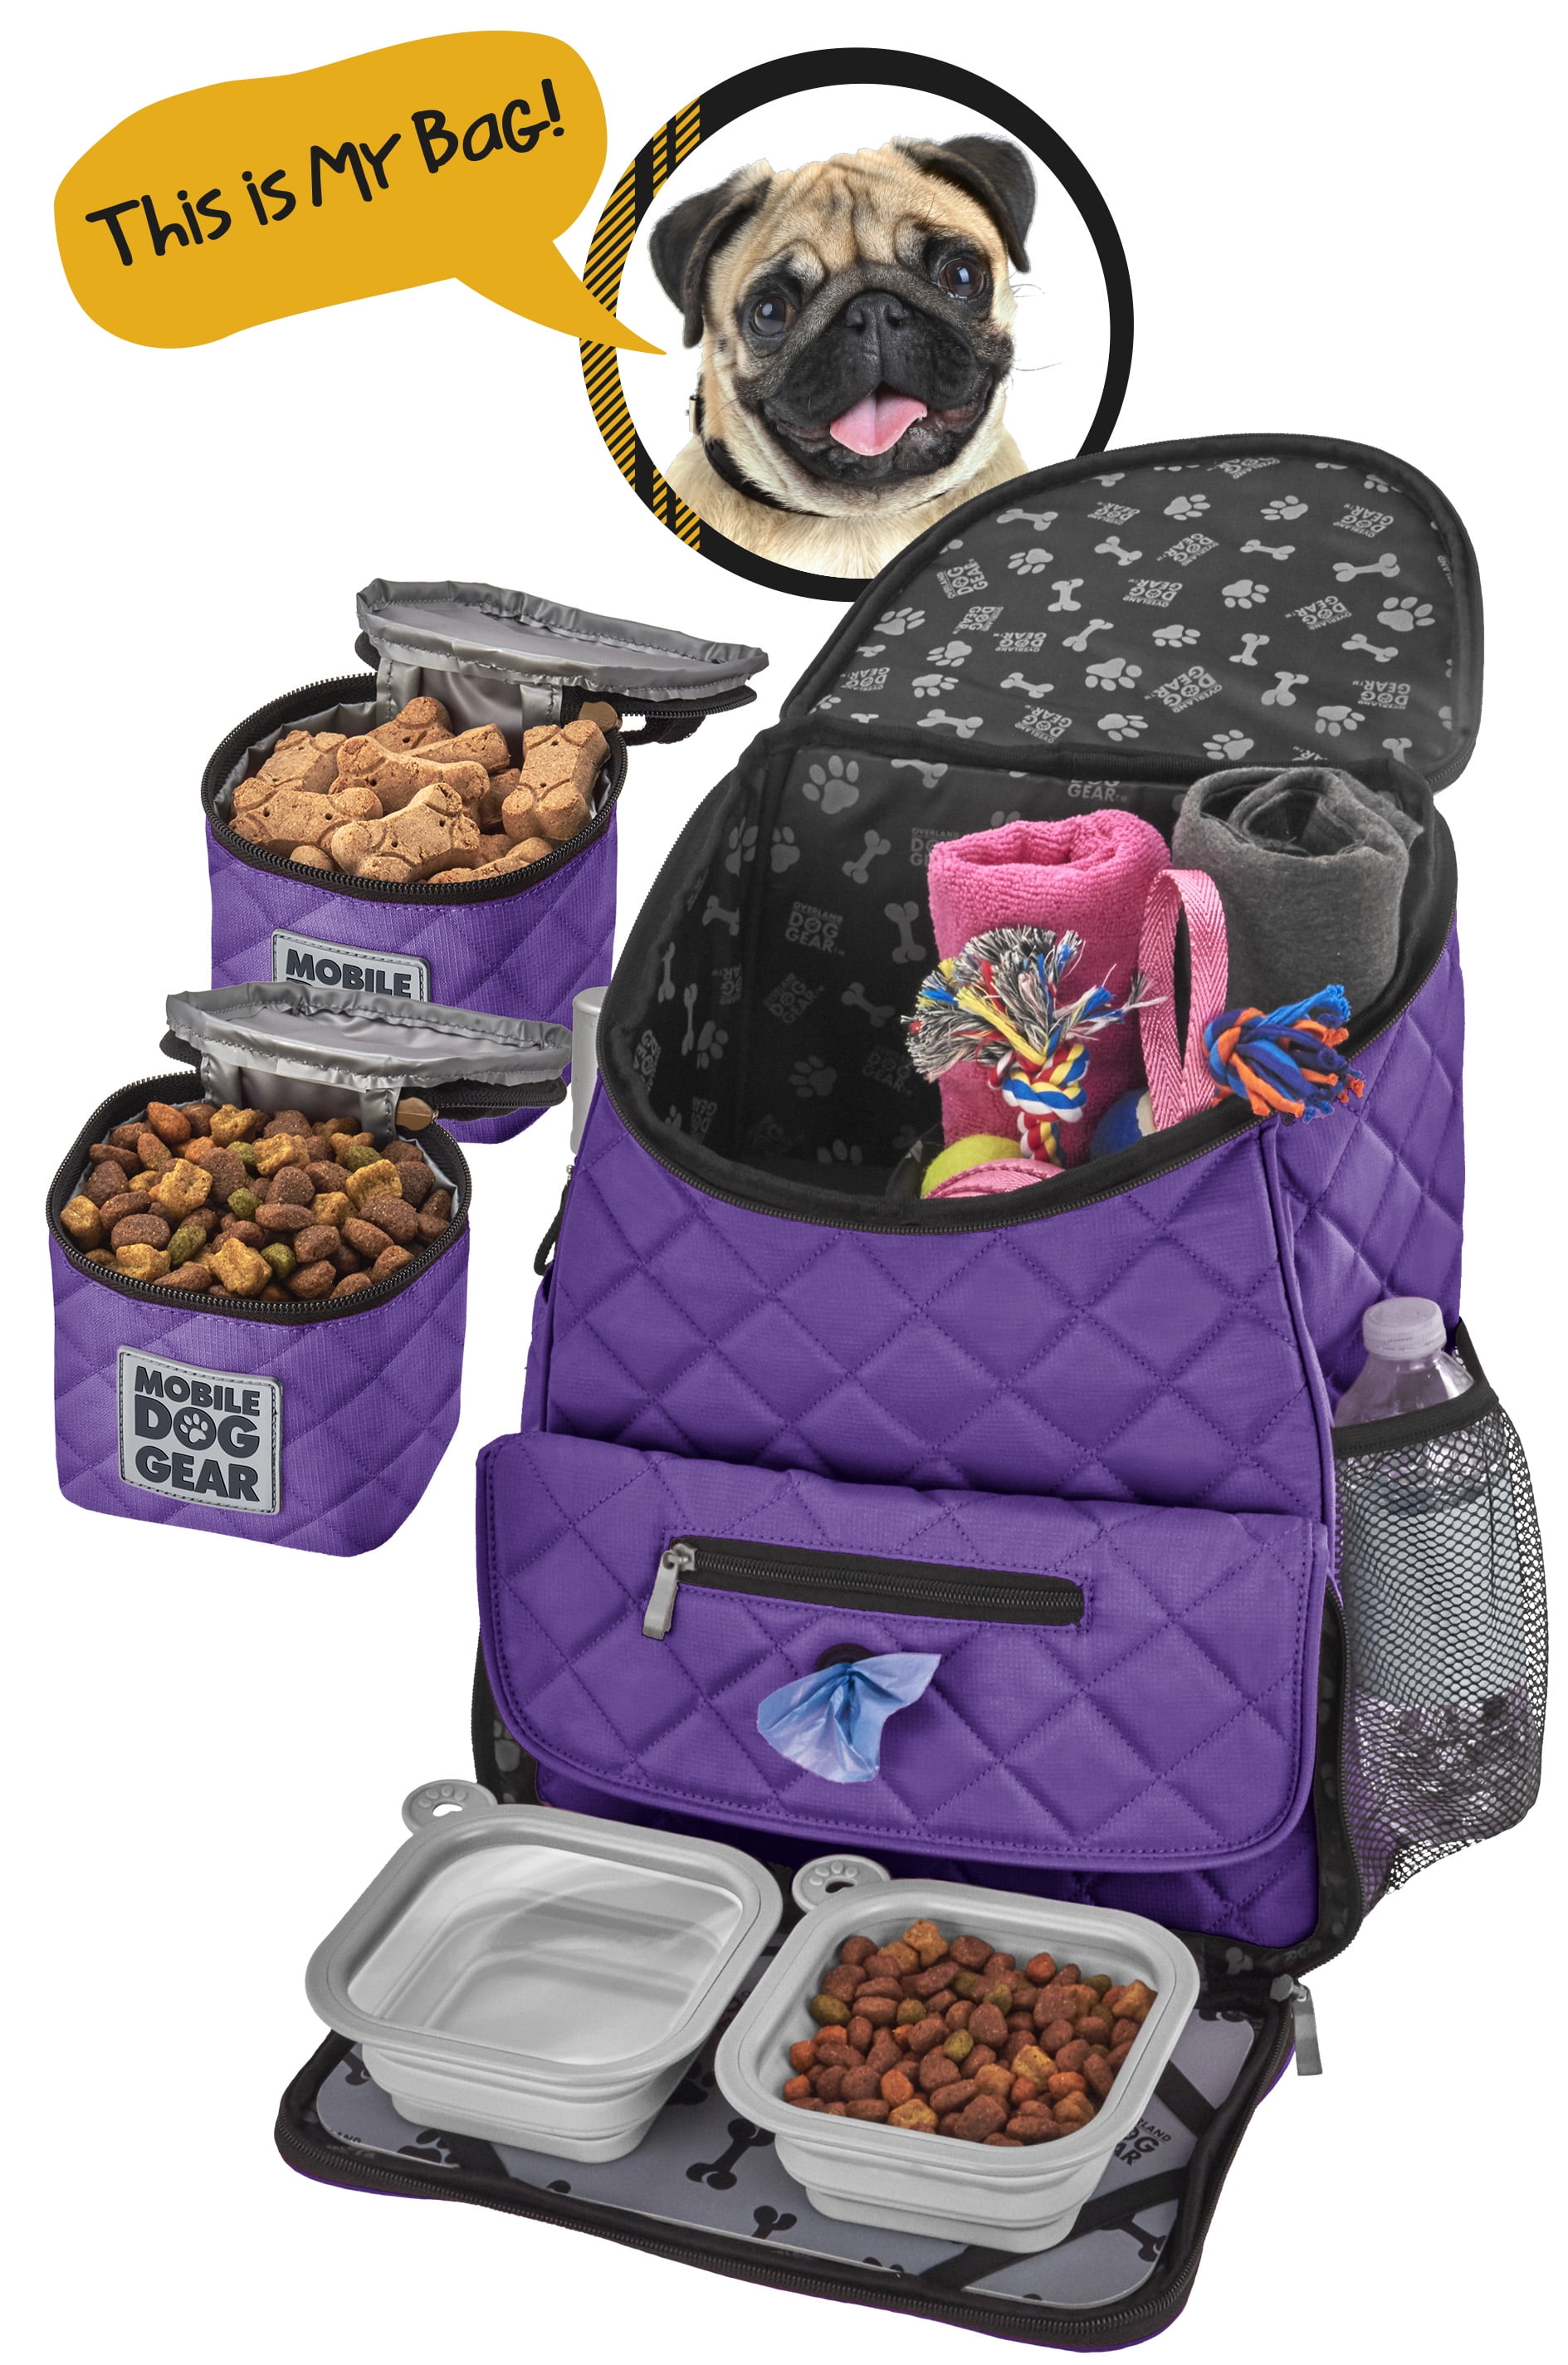 Mobile Dog Gear Weekender Backpack 